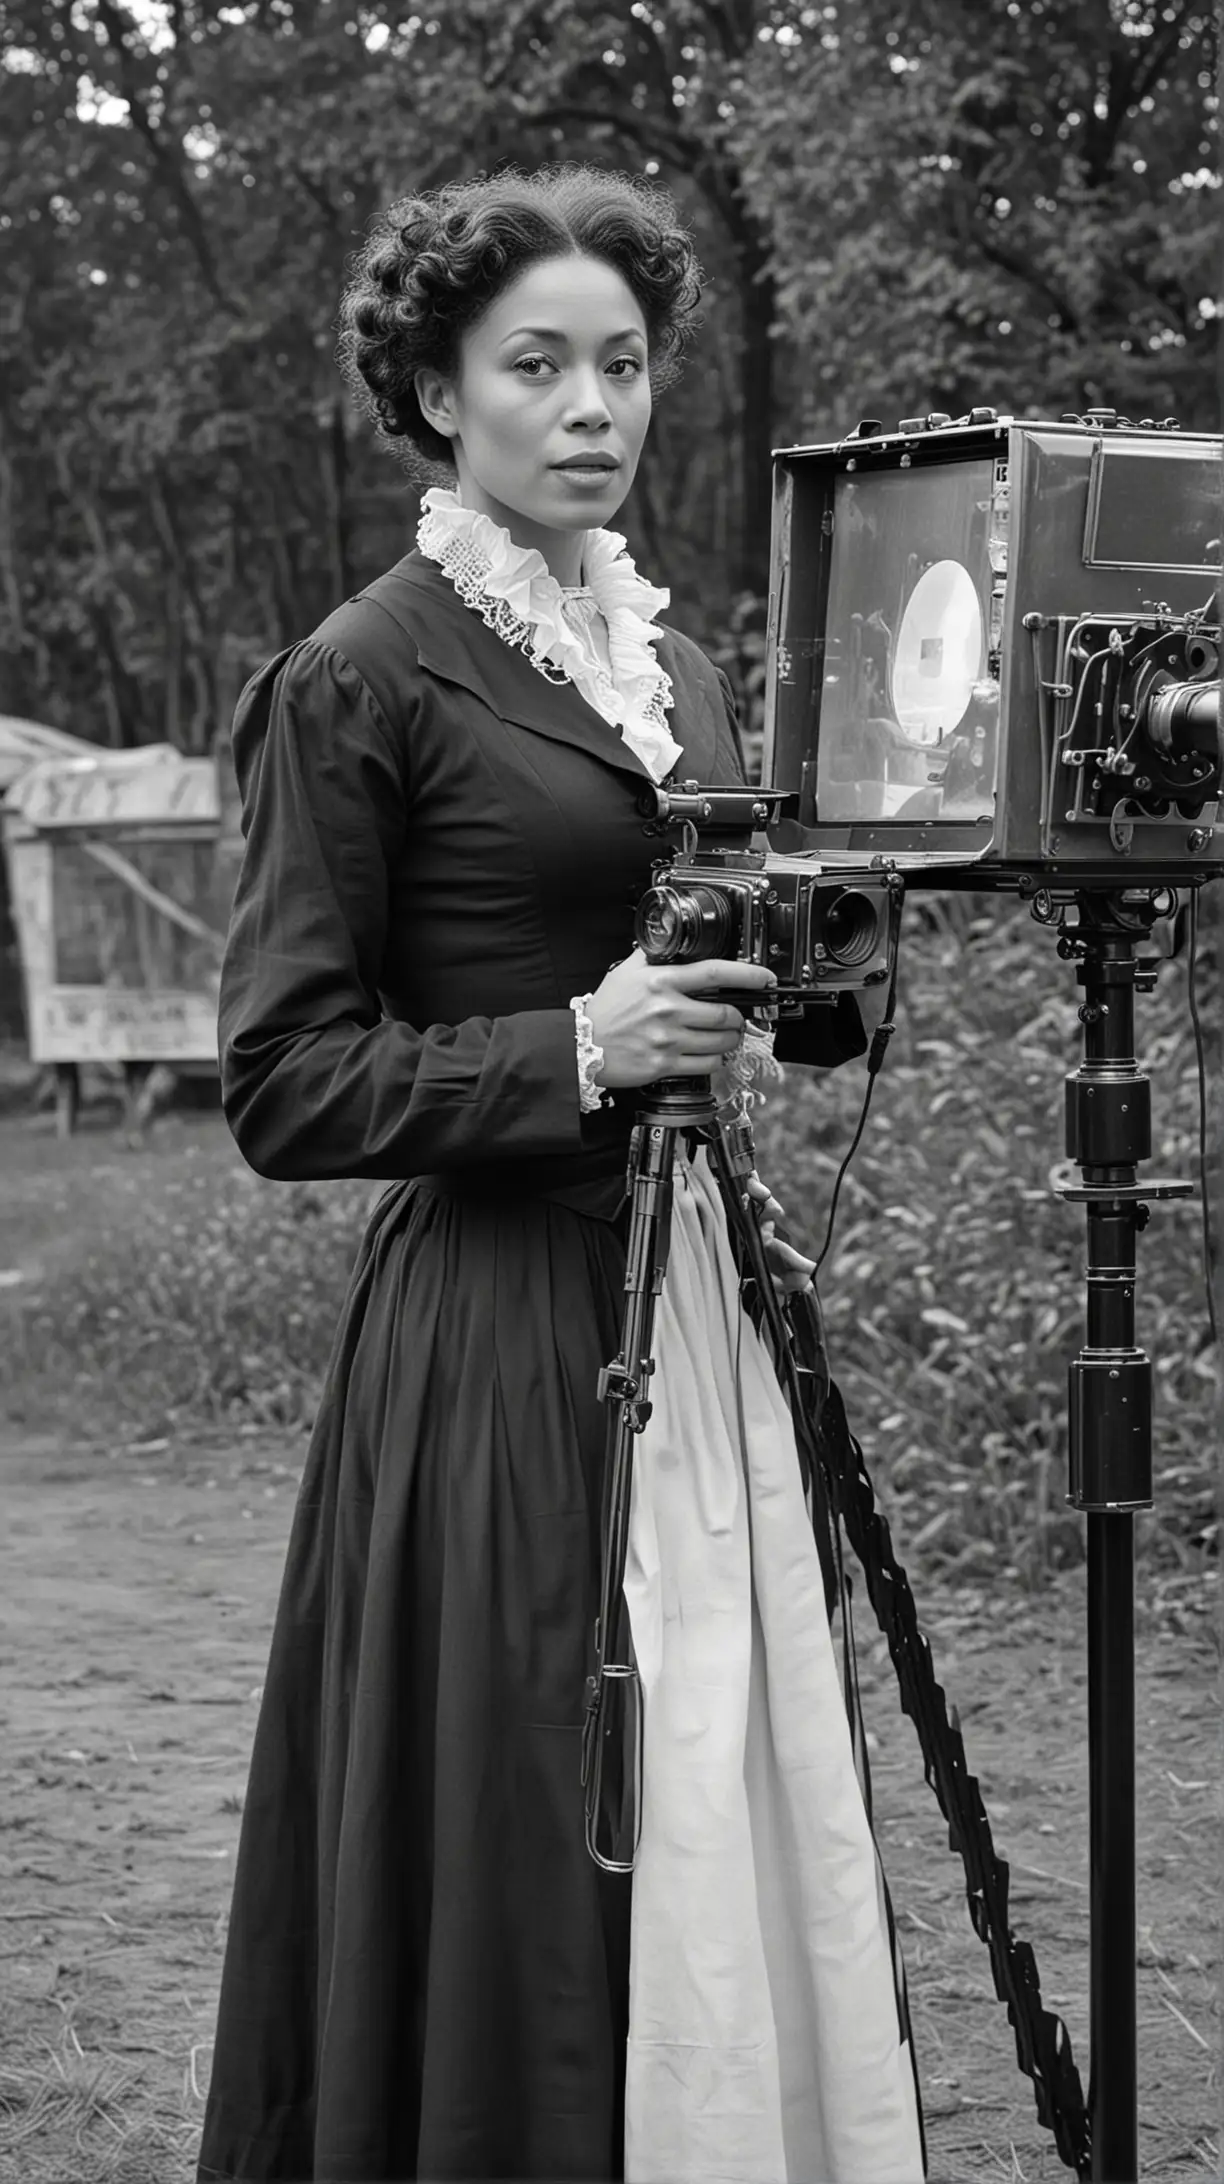 Maria P Williams LightSkinned Film Producer in 1800s Black and White Scene